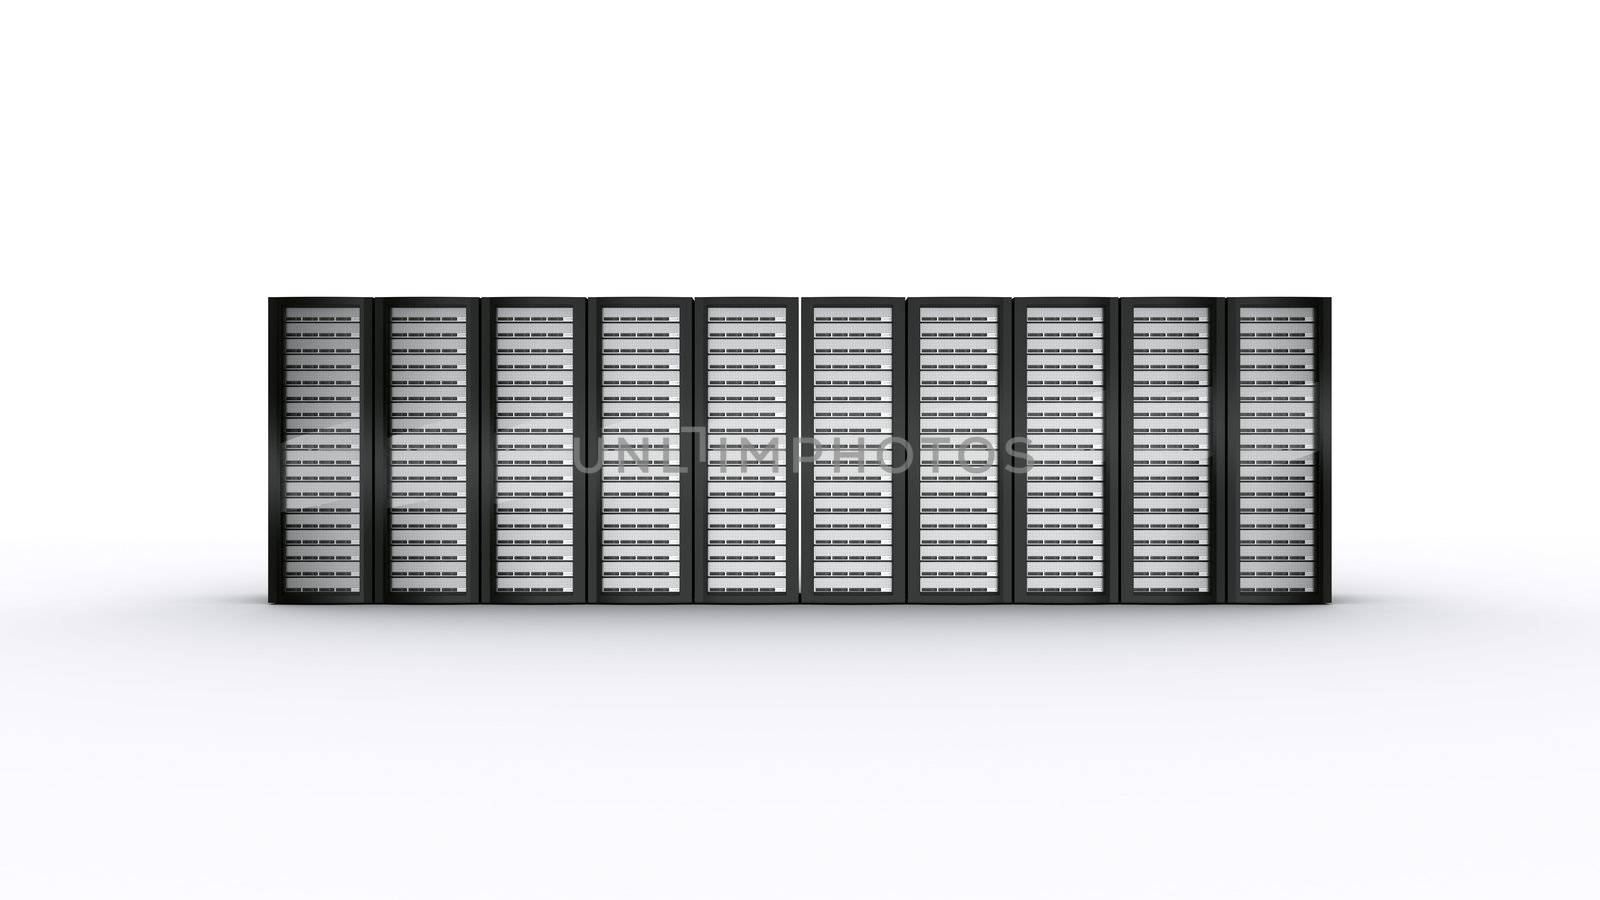 row of rack servers by zentilia